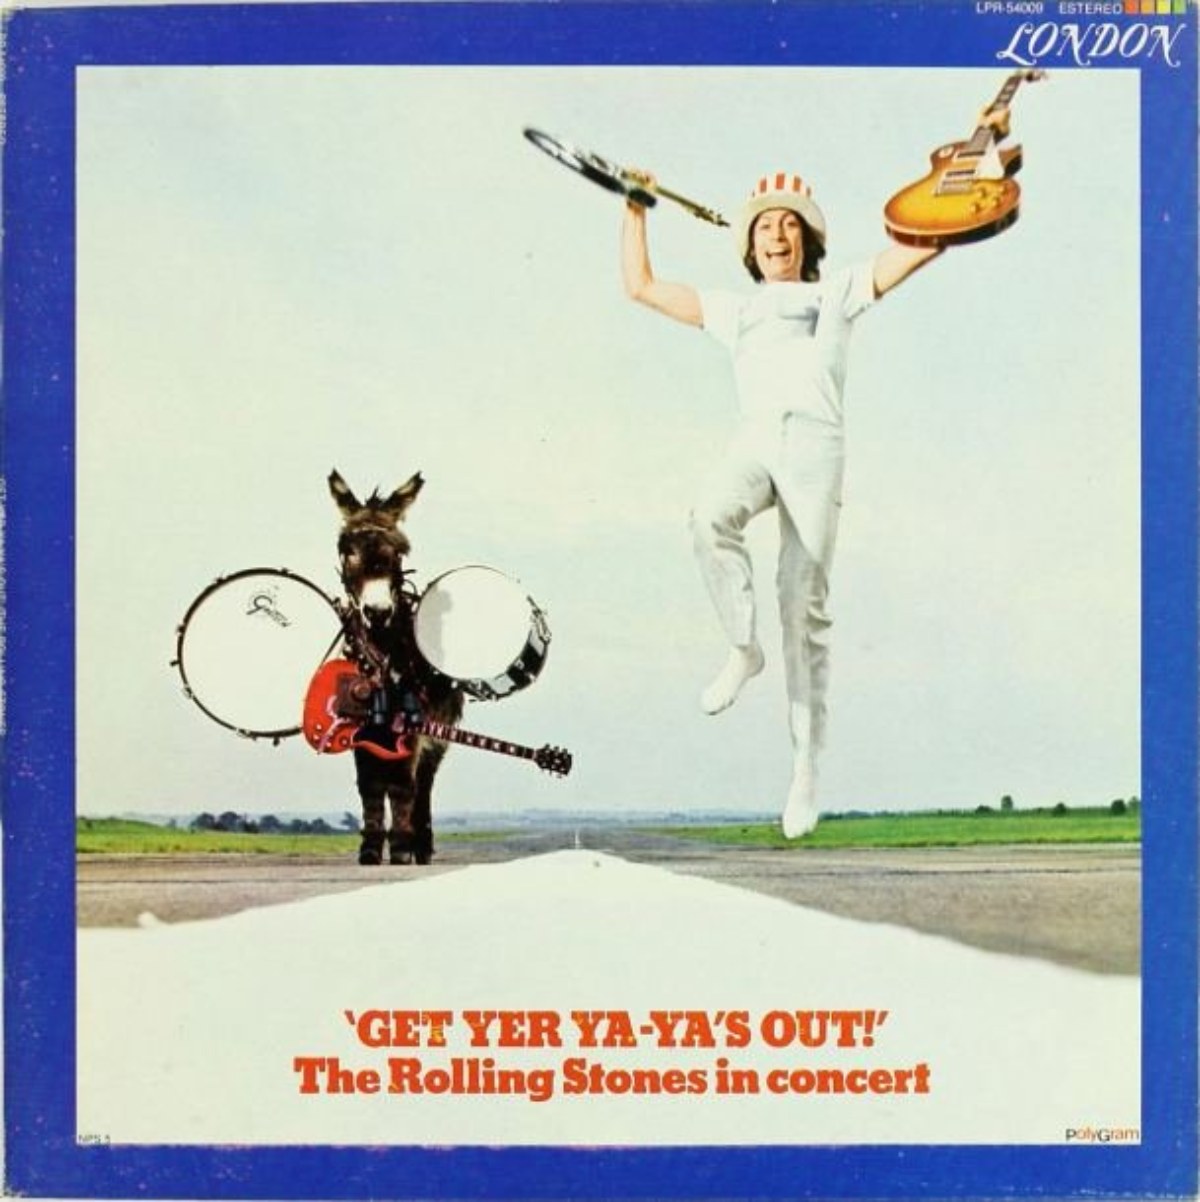 Os Rolling Stones - Tire Yer Ya-Ya's de lá! (1970)